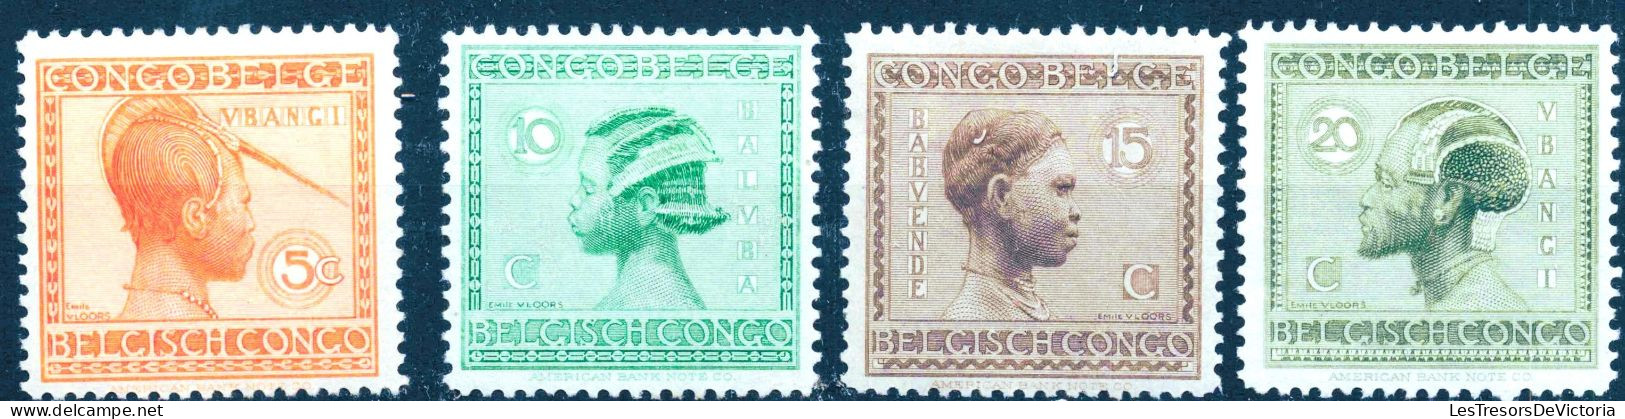 Timbres - Congo Belge - 1923 - COB 106/17* - Cote 60 - Neufs